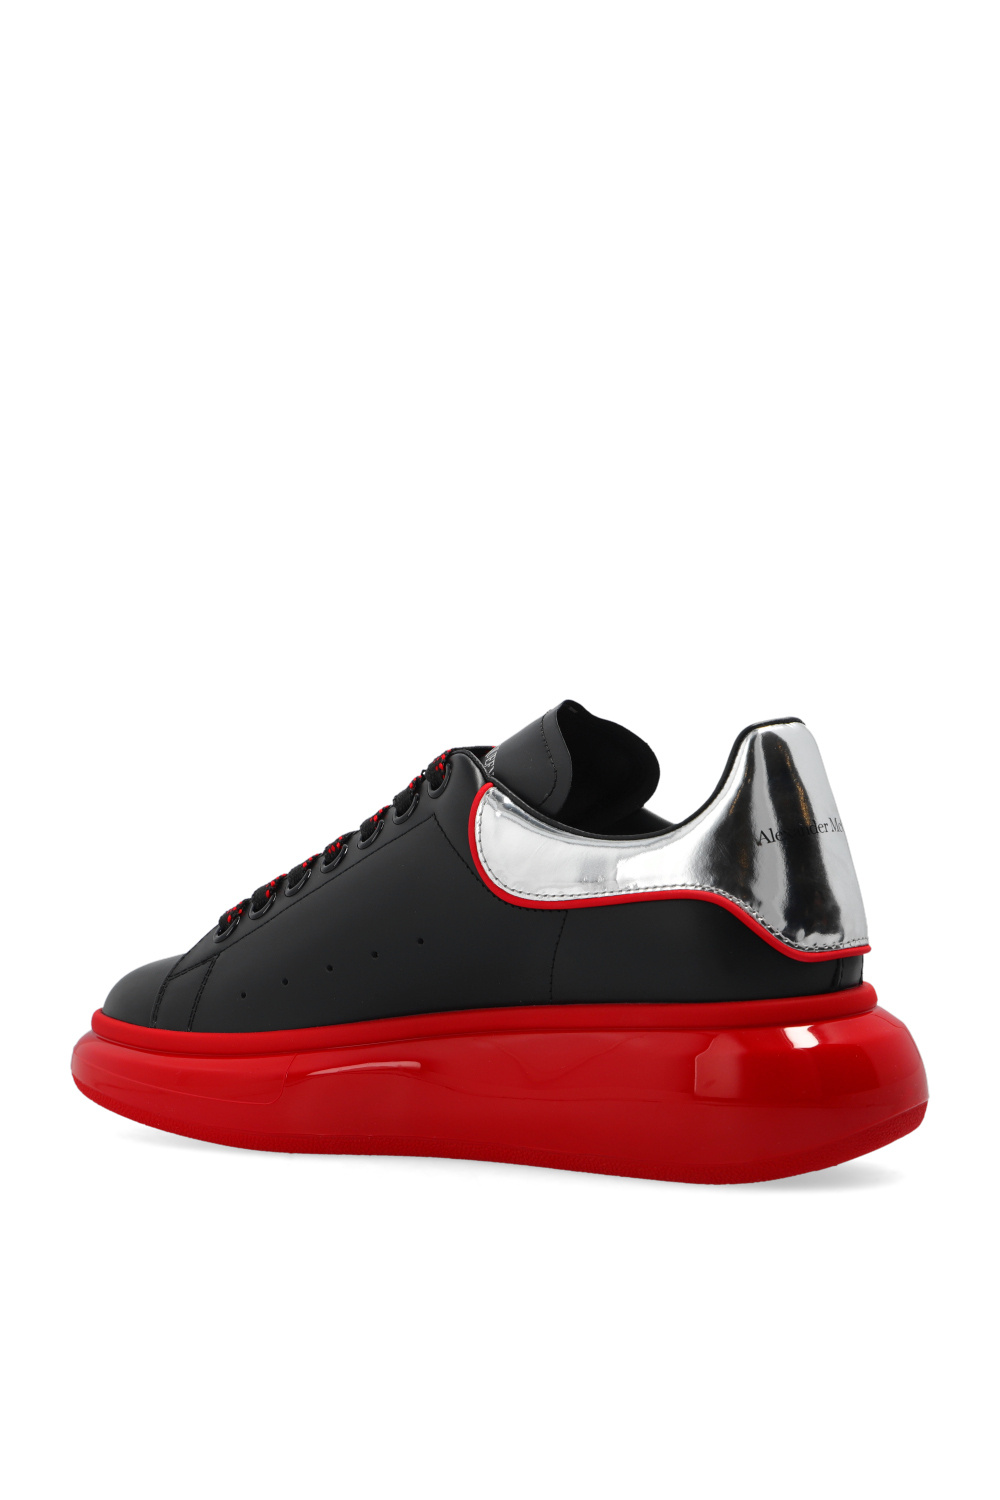 Alexander McQueen shoes, which color do you like? : u/luxurybrandseller998